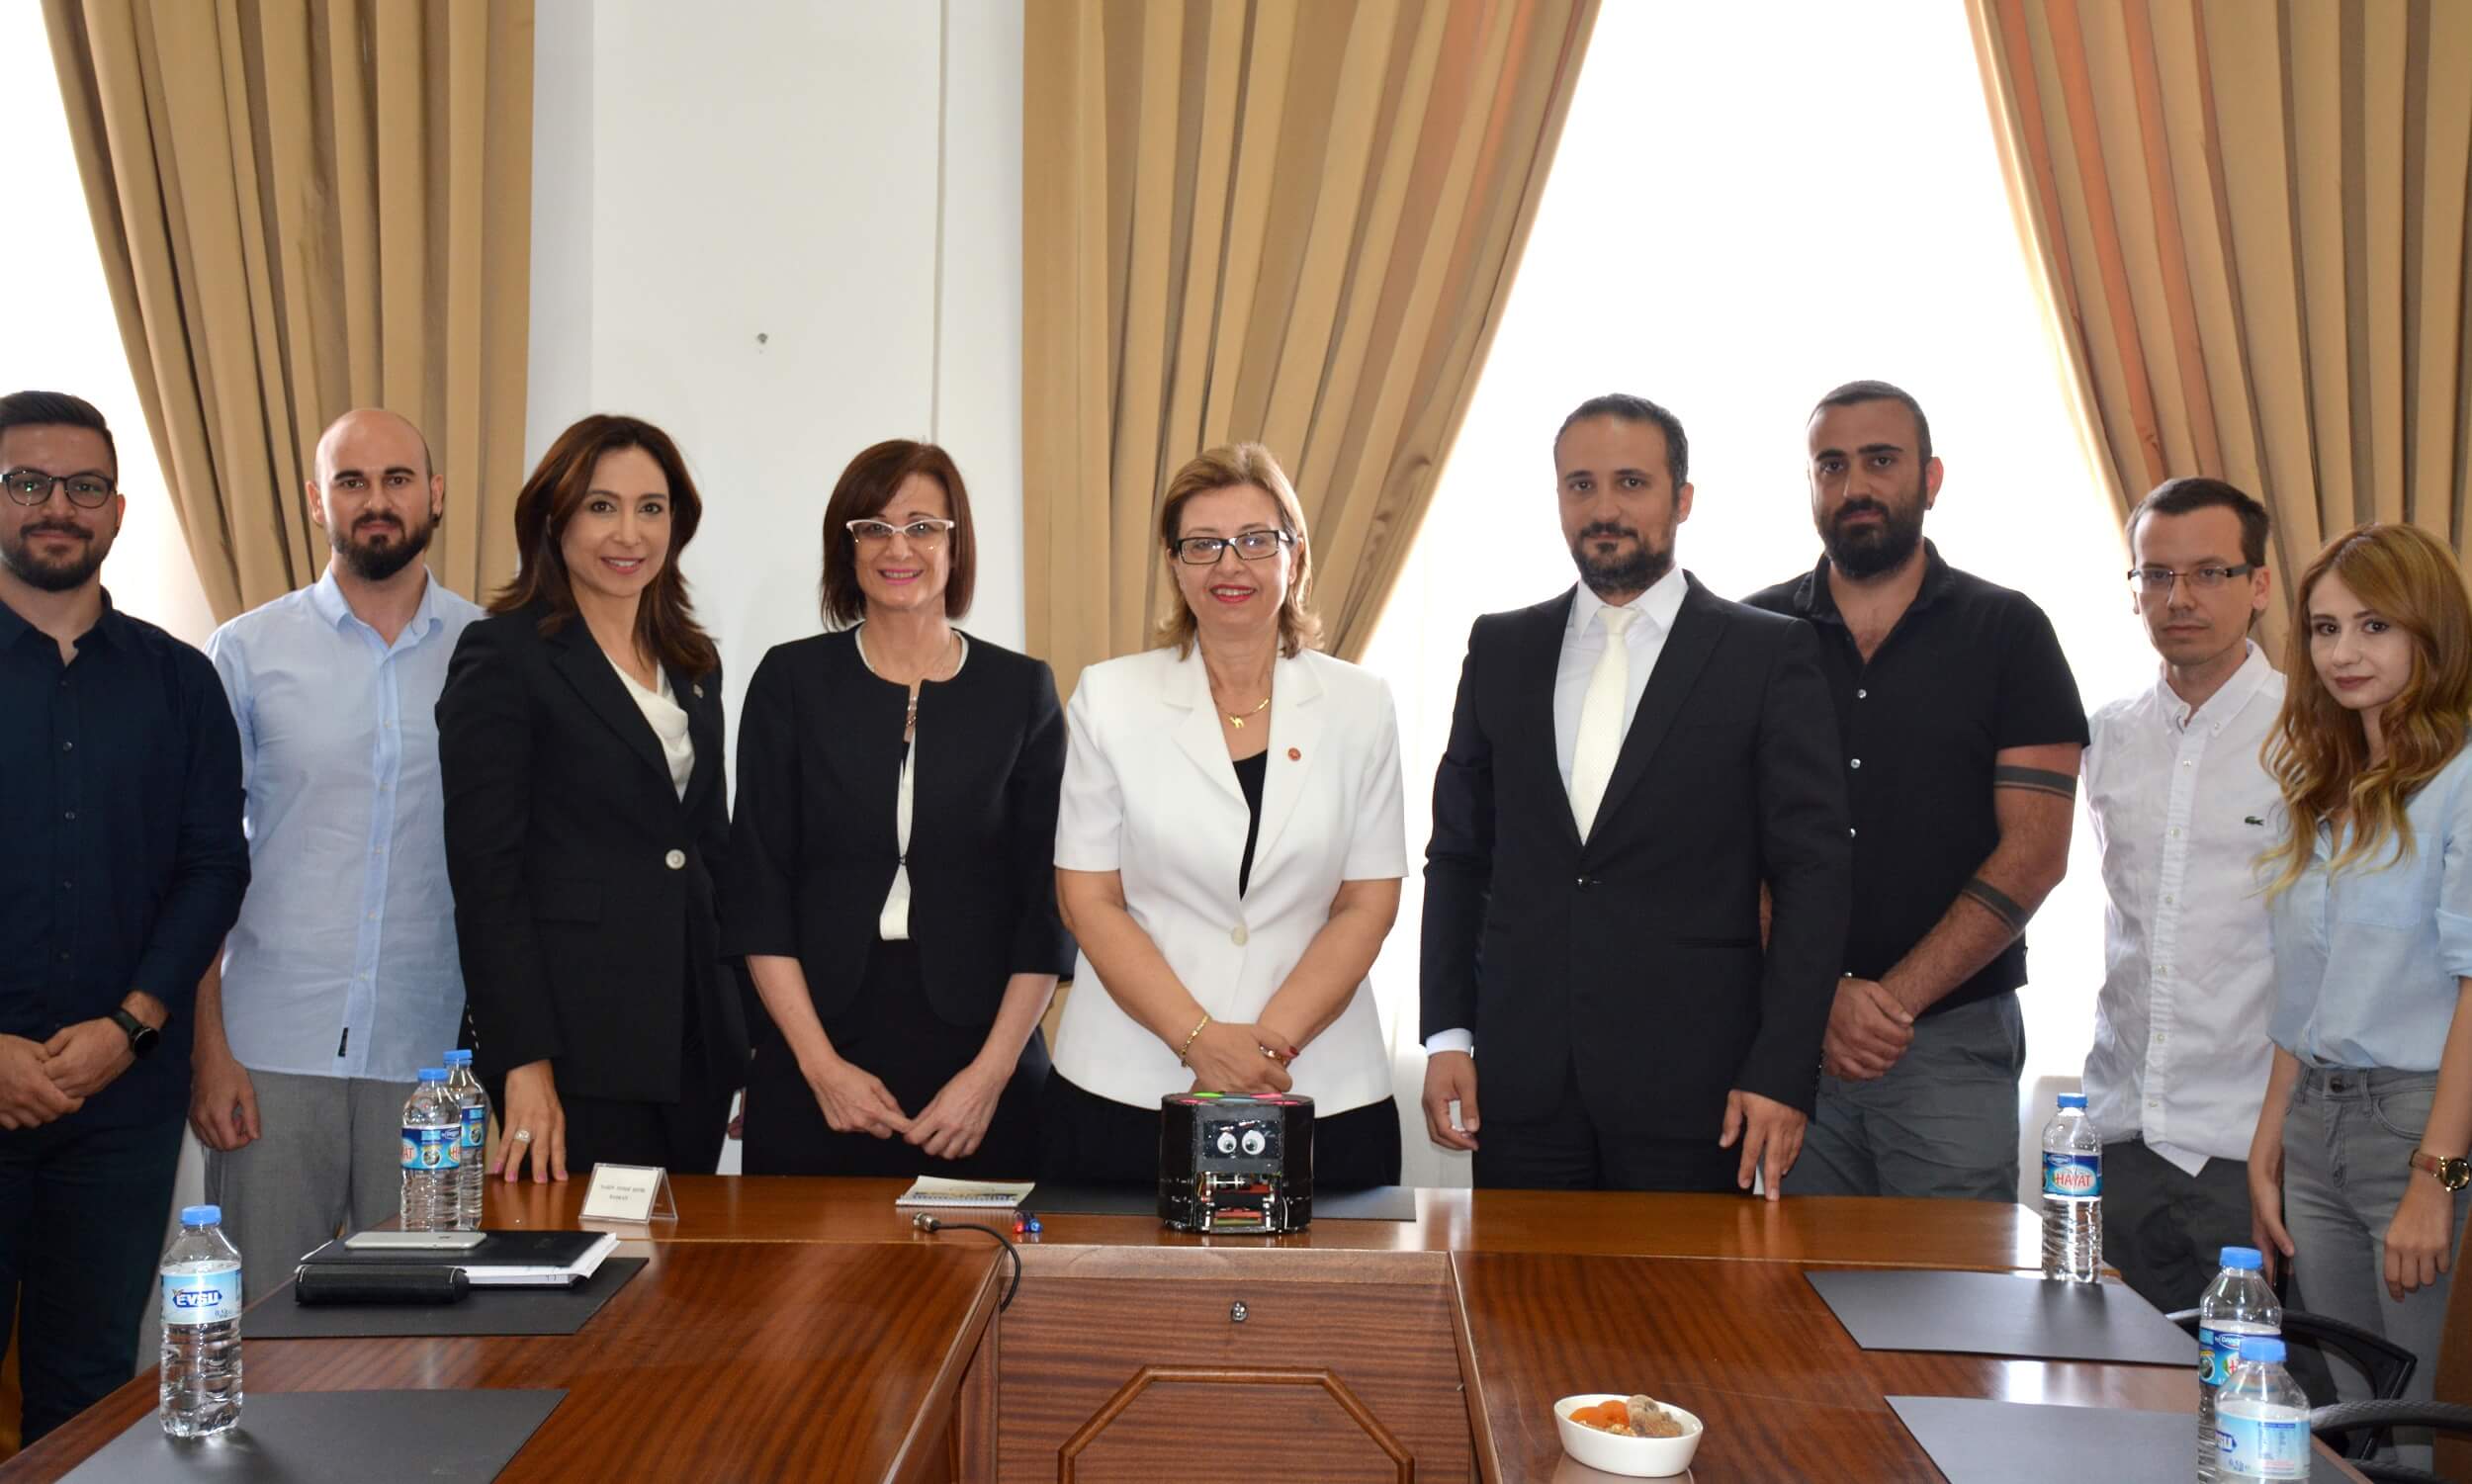 The World Champion Robotic Soccer Team of Near East University visits Narin Ferdi Şefik, President of the Supreme Court of TRNC